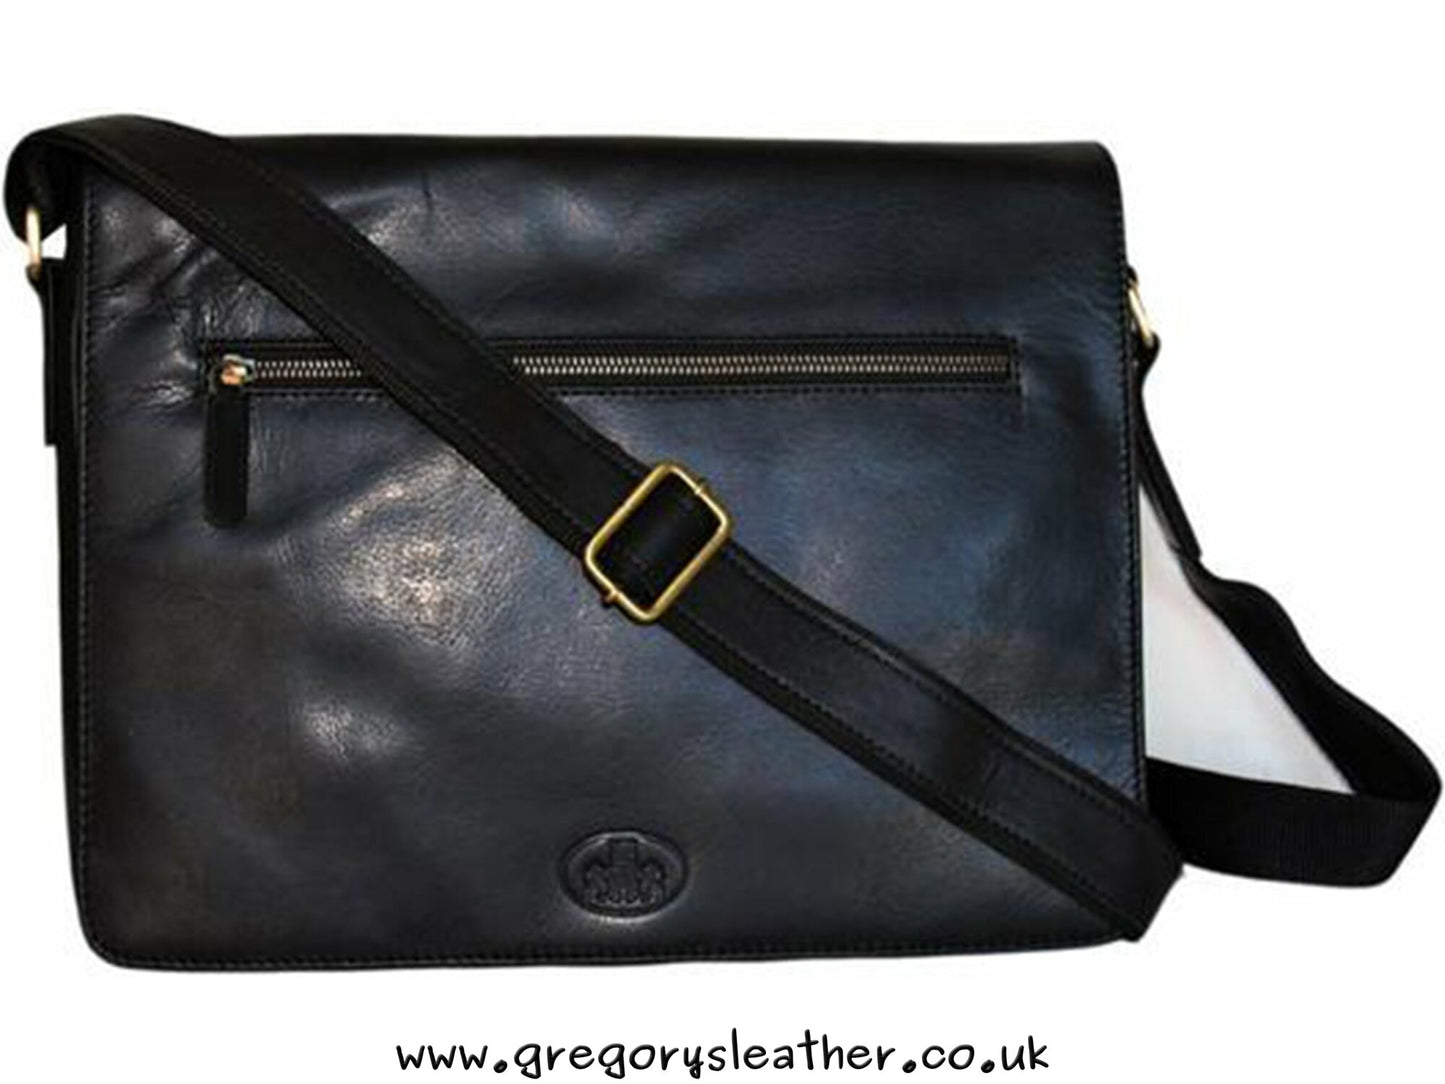 Black Cremoso Leather Full Flap Messenger Bag by Rowallan